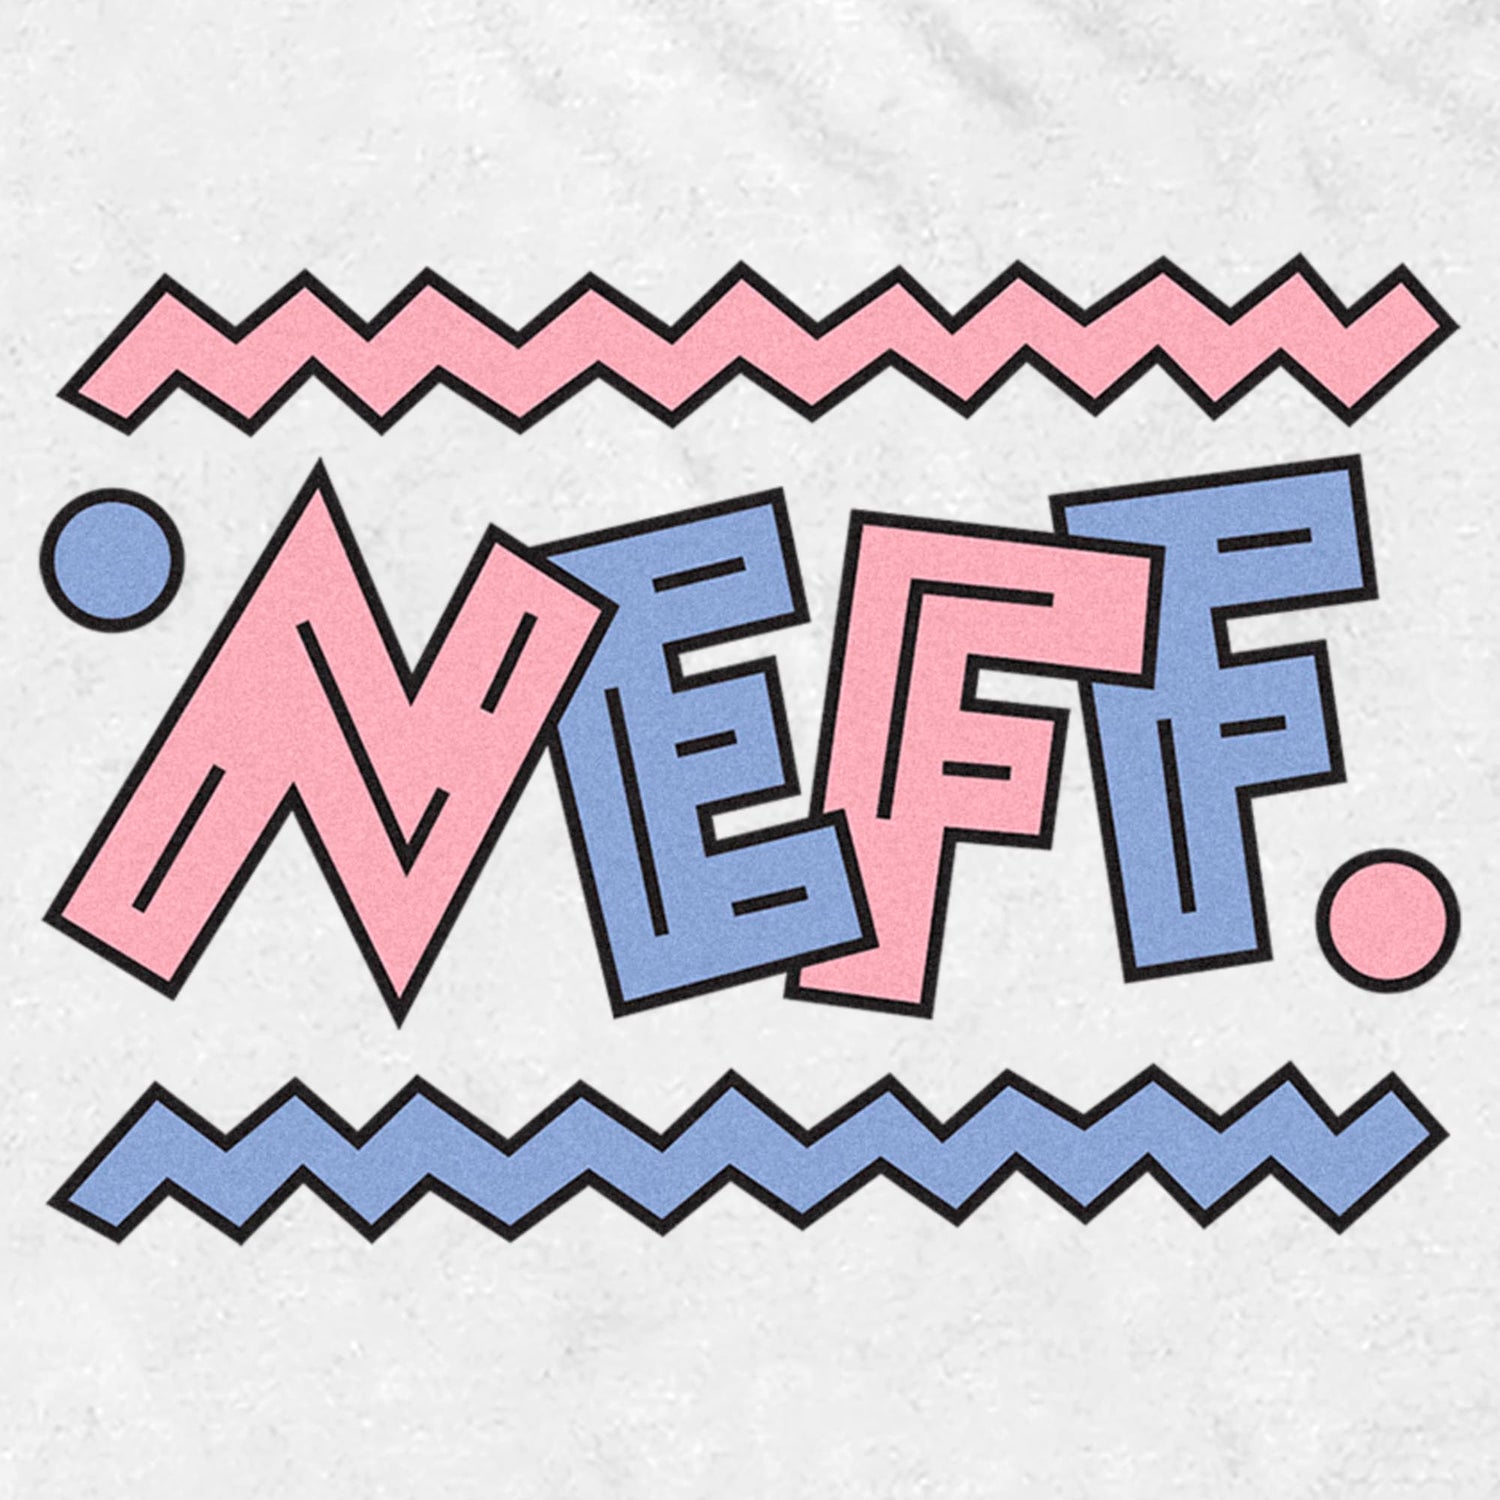 Men's NEFF Retro Pink and Blue Logo T-Shirt